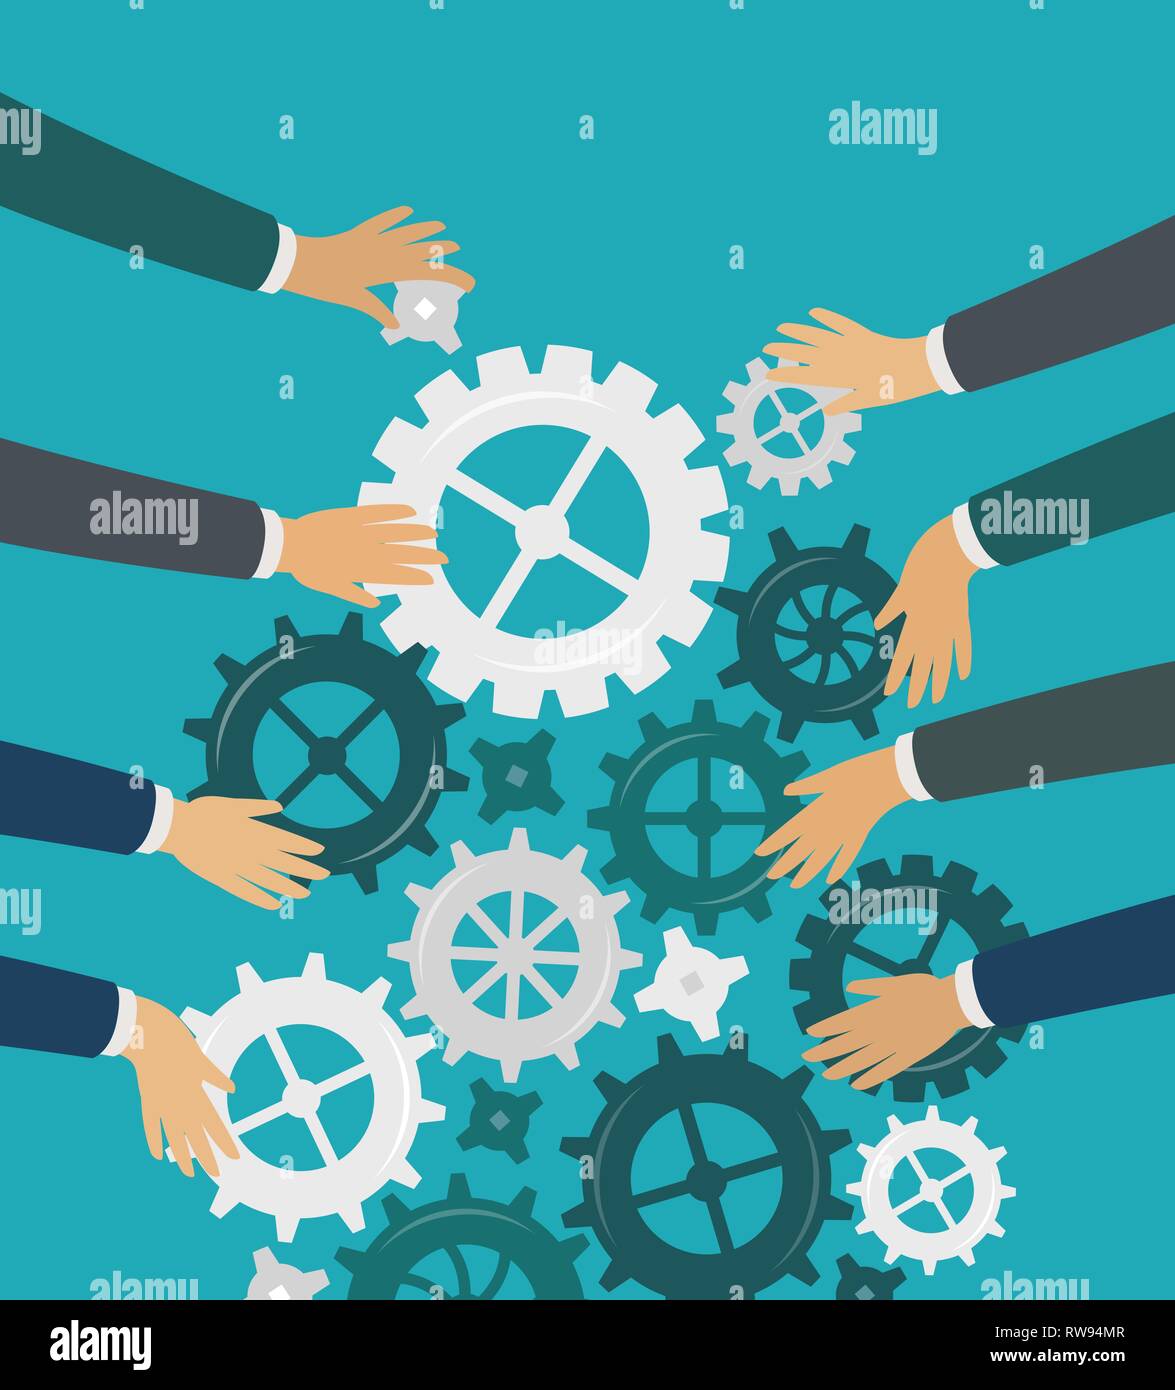 Teamwork. Idea, brainstorm, business concept. Cooperation vector illustration Stock Vector